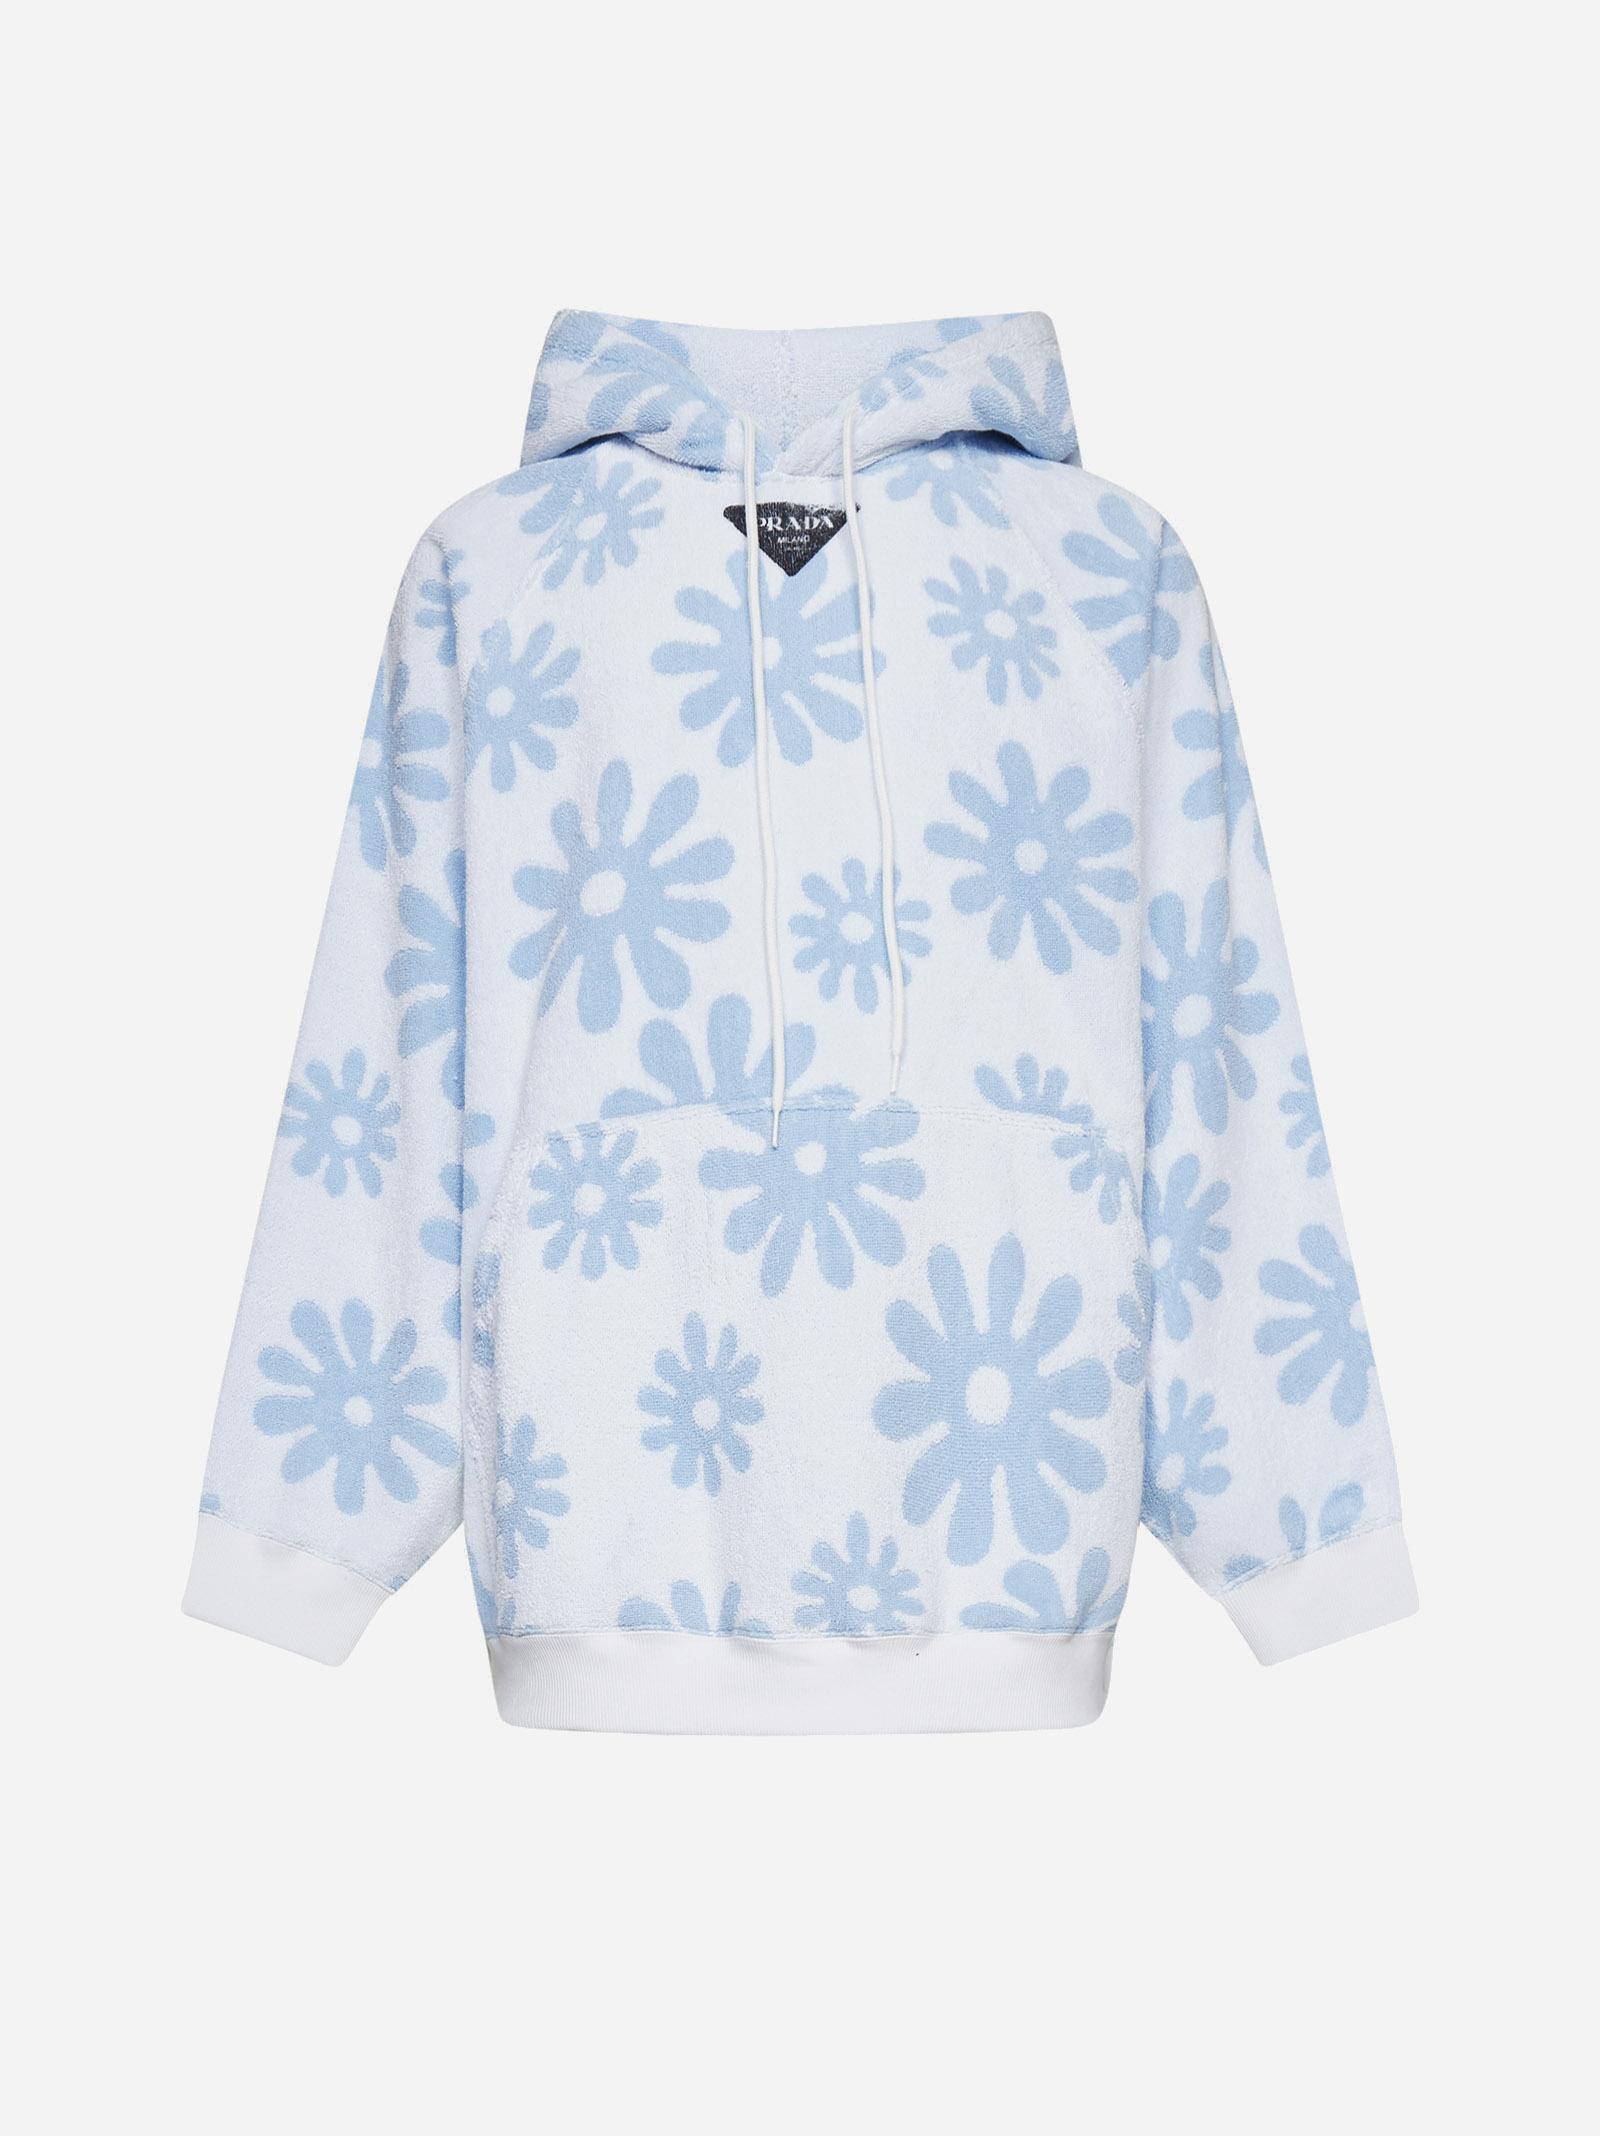 Prada Floral Print Polar Fleece Hoodie in Blue | Lyst